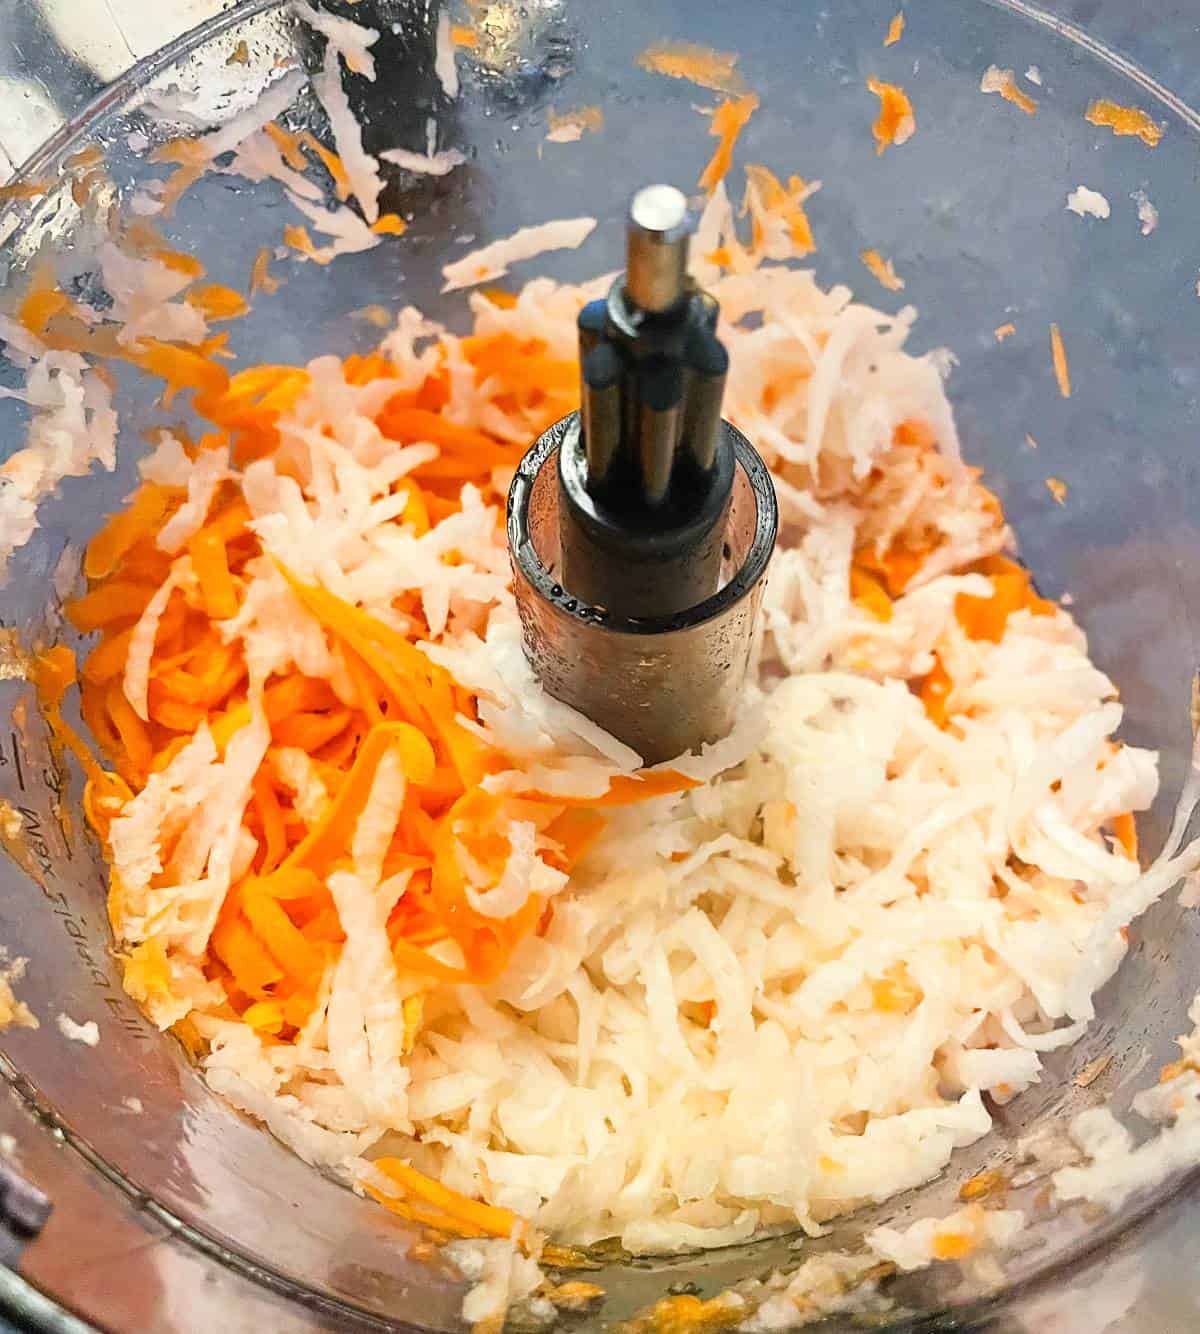 shredded carrots and daikon radish in a food processor.